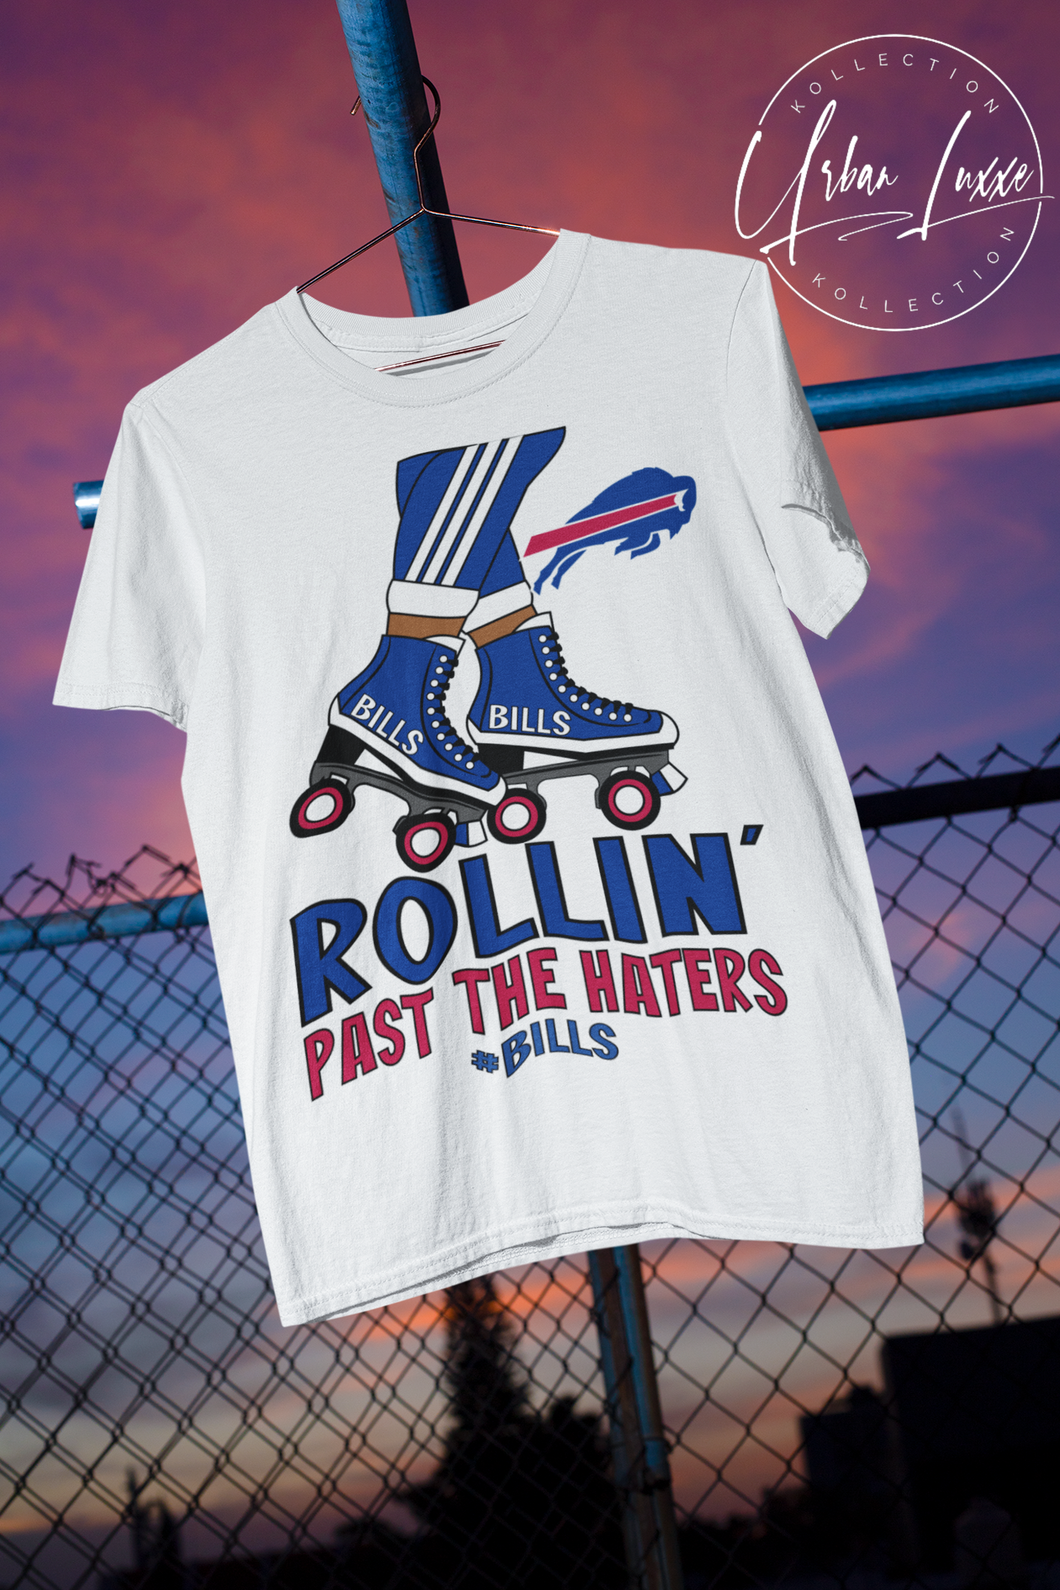 Rollin’ Past The Haters Buffalo Bills T-shirt